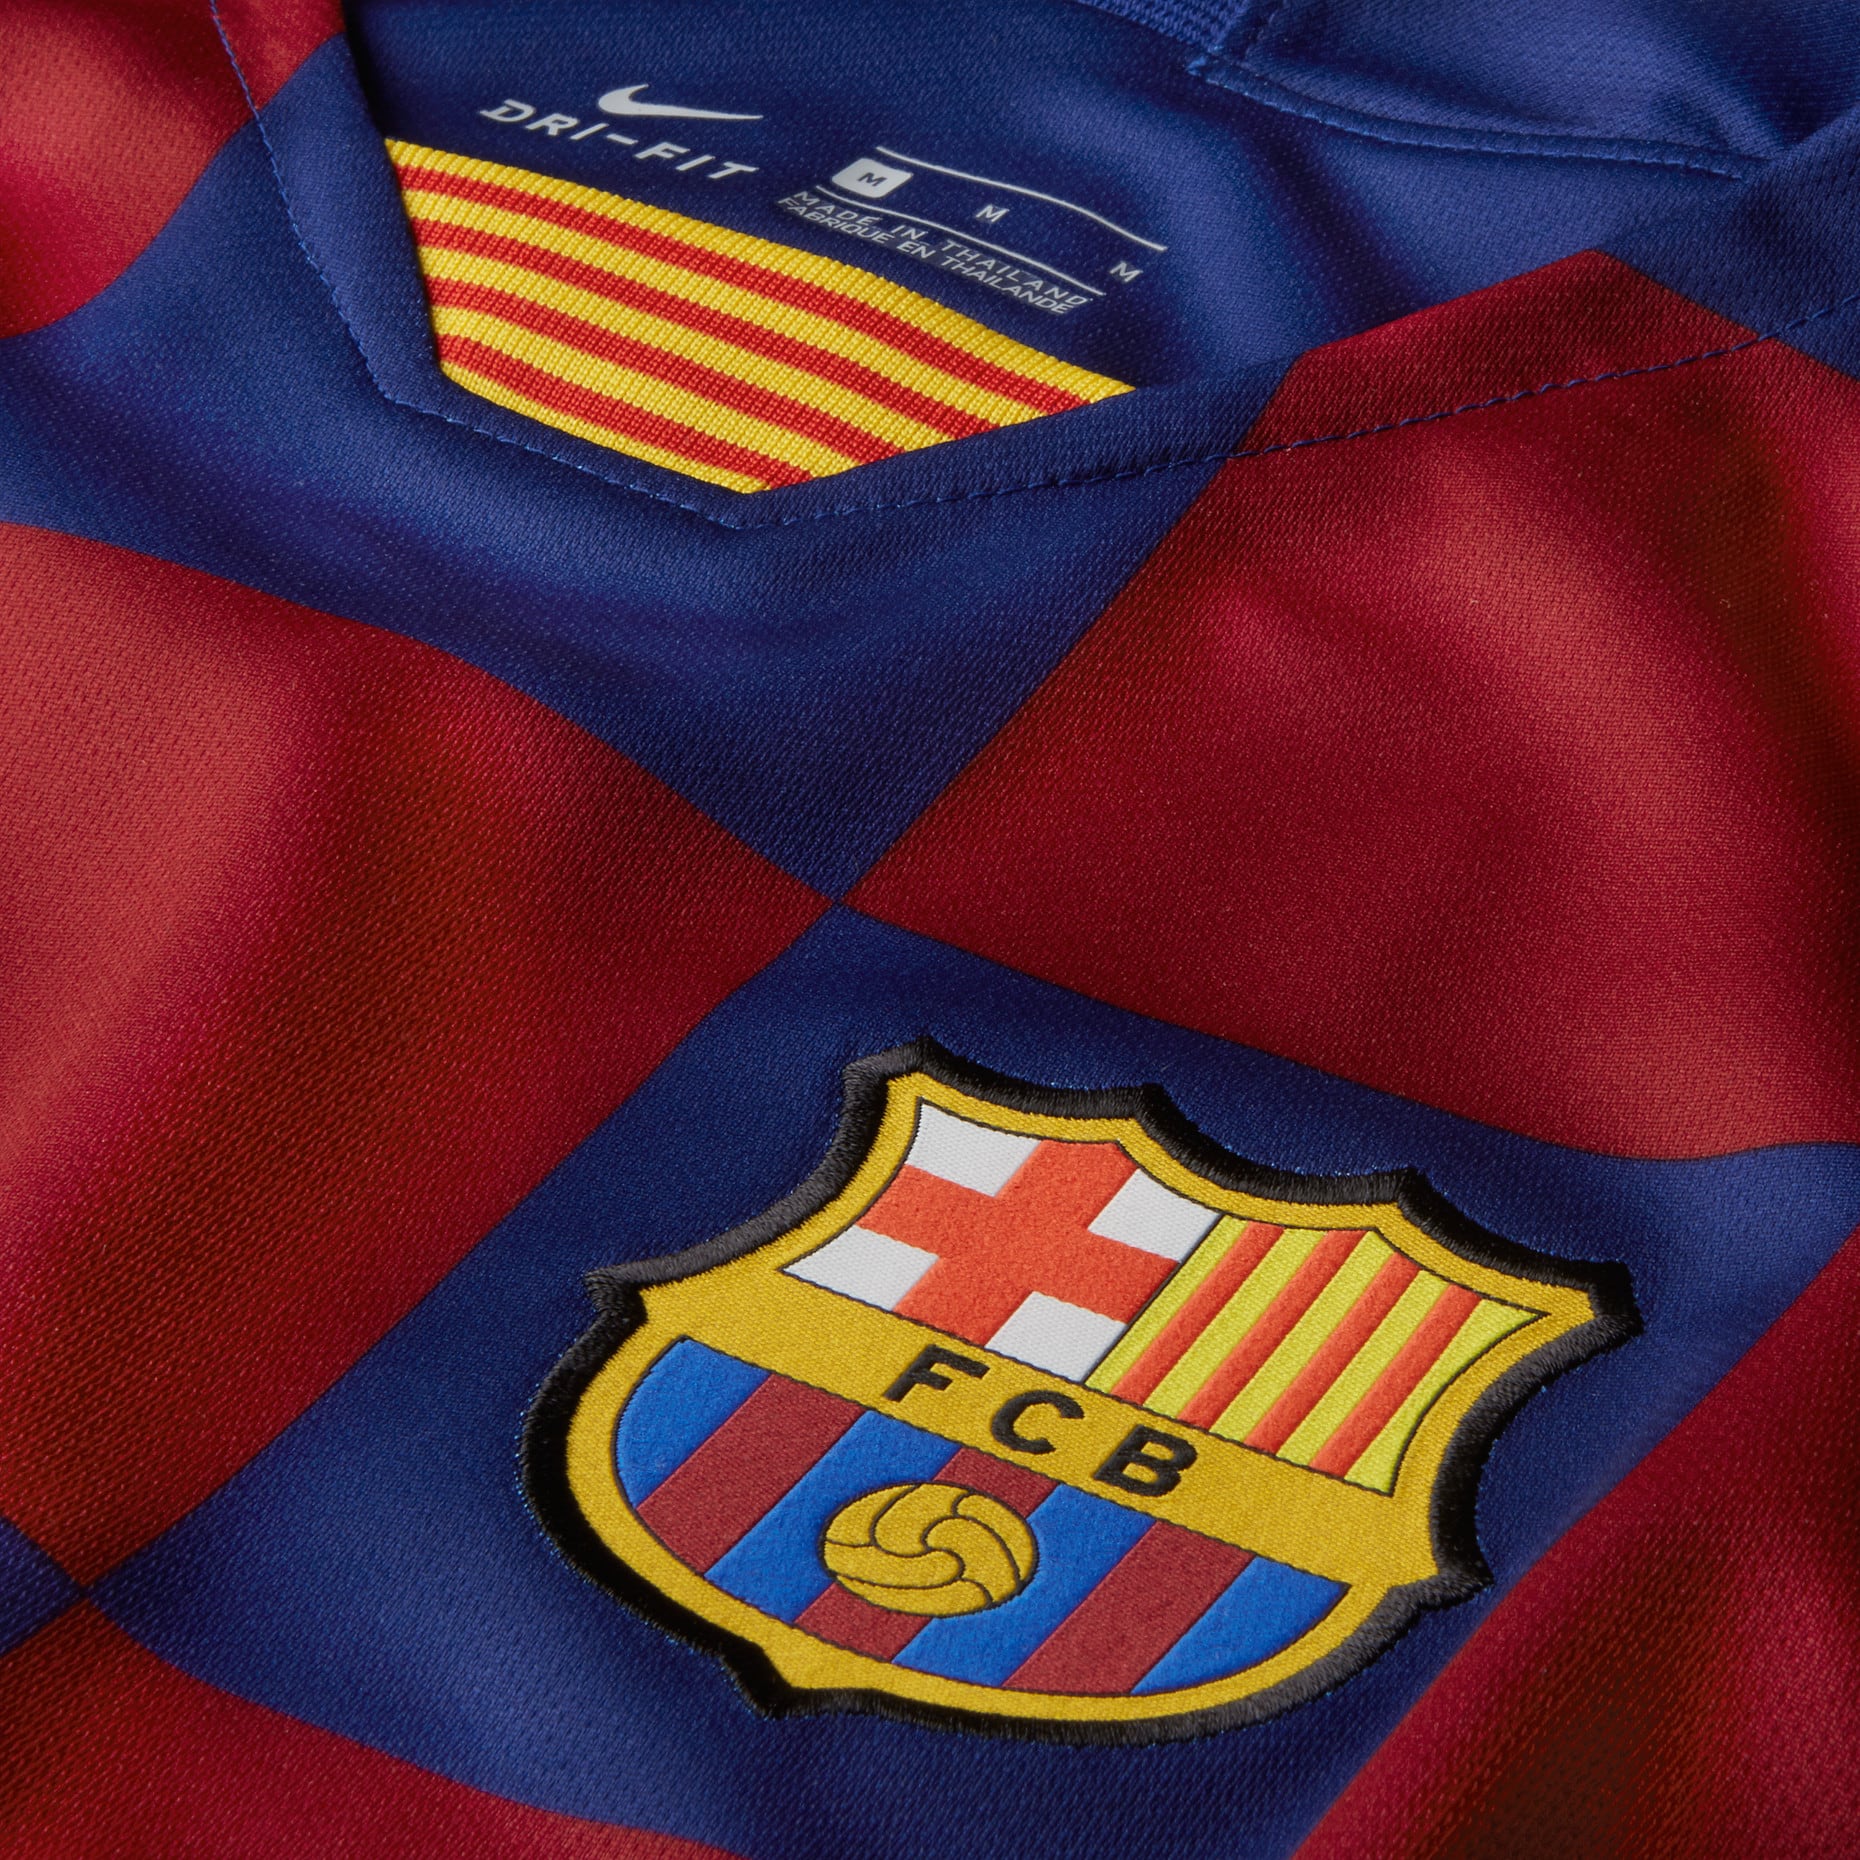 fc barcelona 2019 jersey